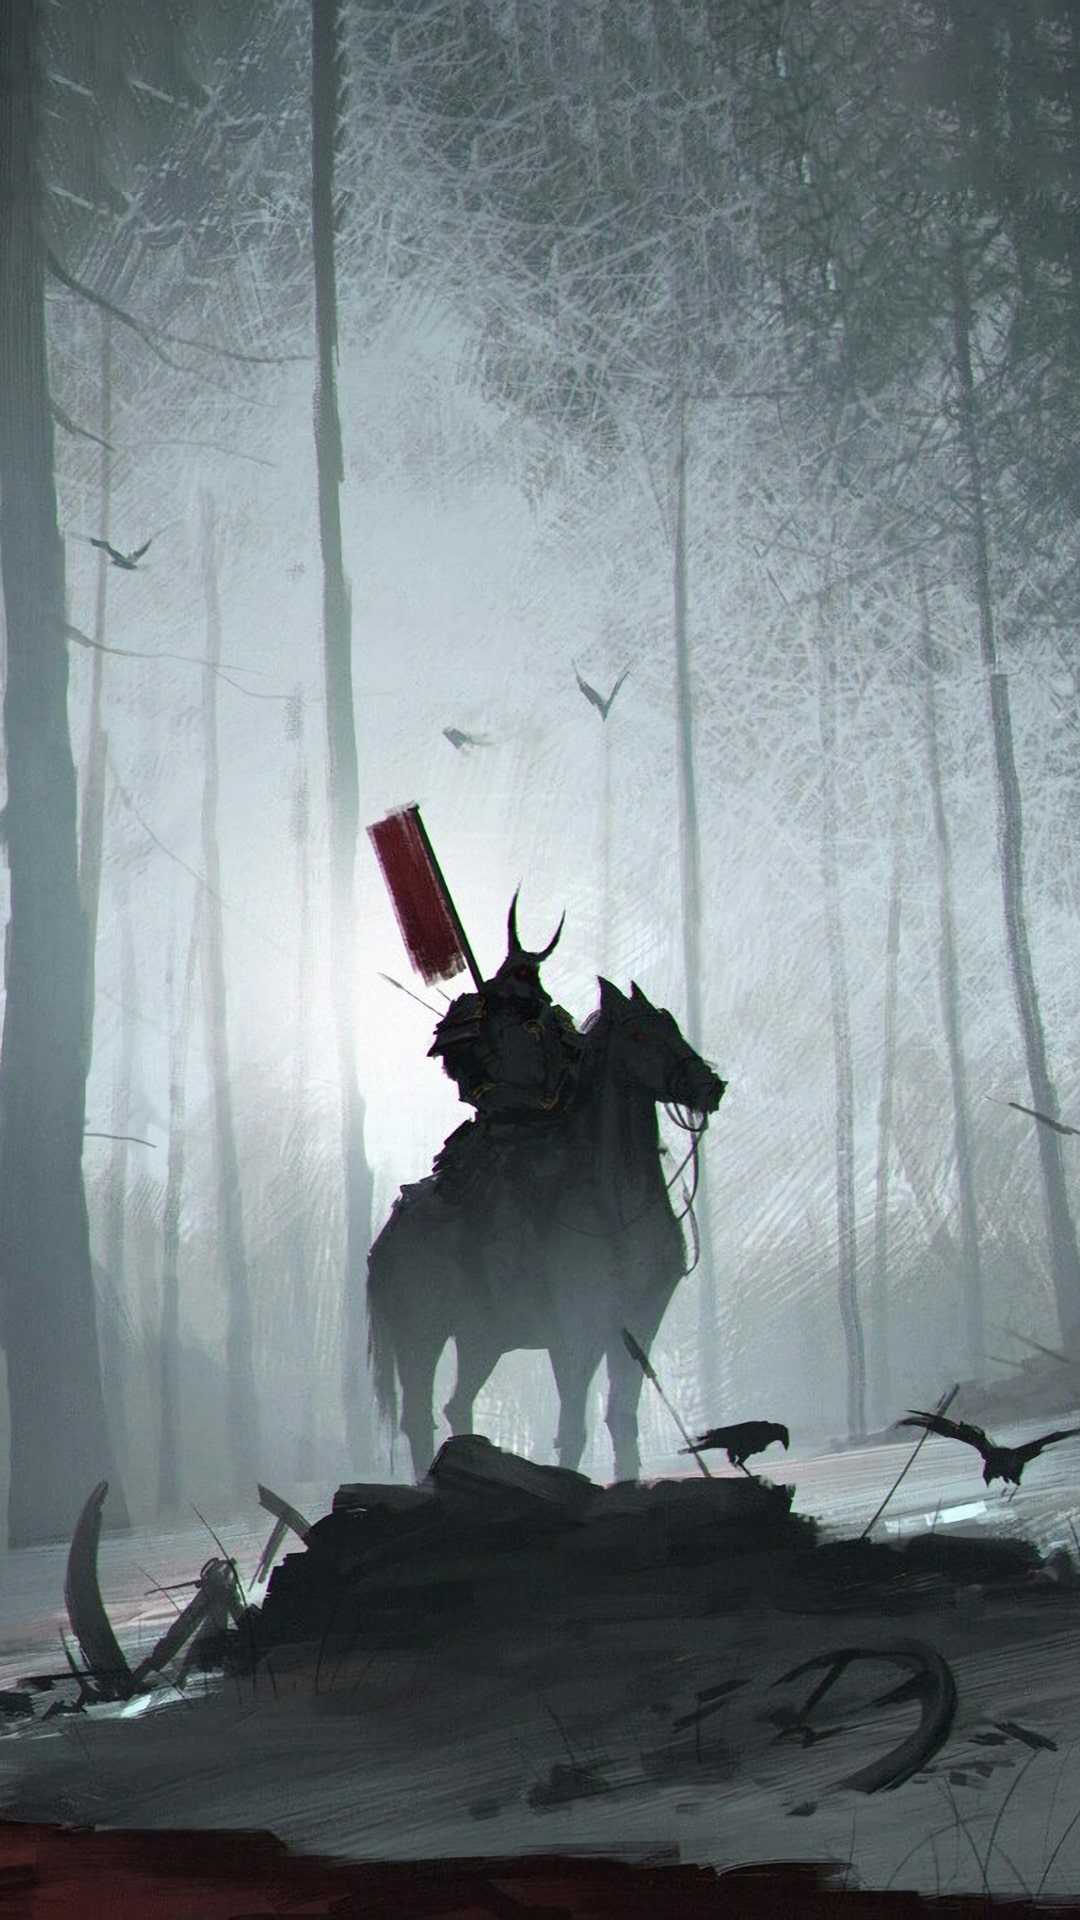 A man riding on horseback in the woods - Samurai